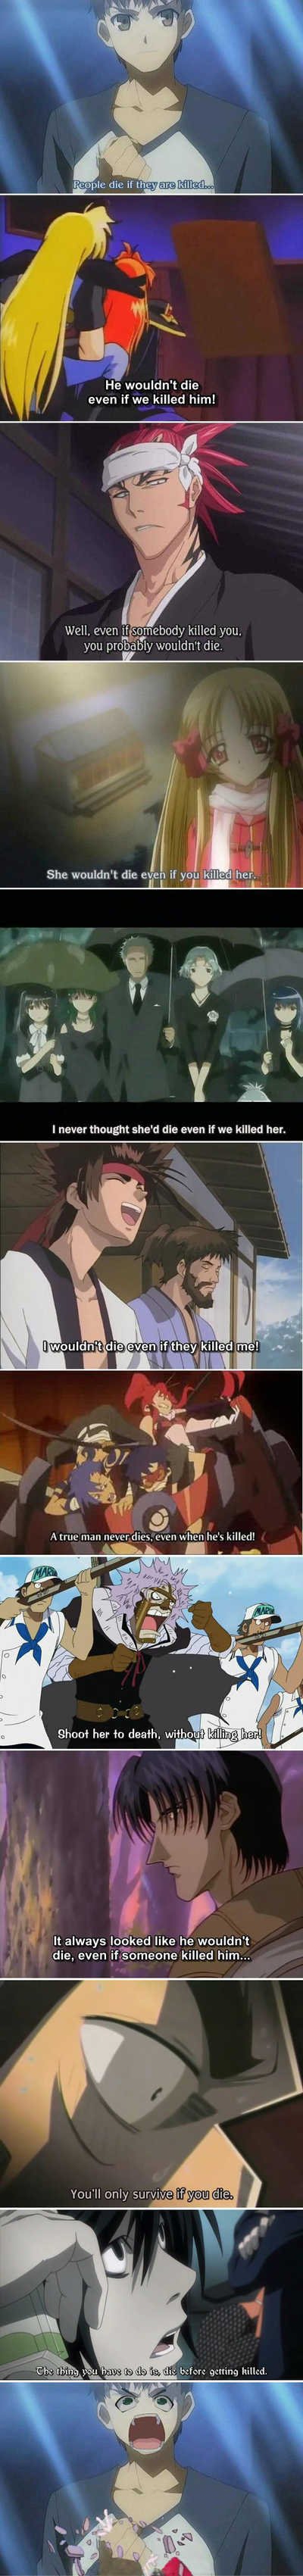 Anime logic.